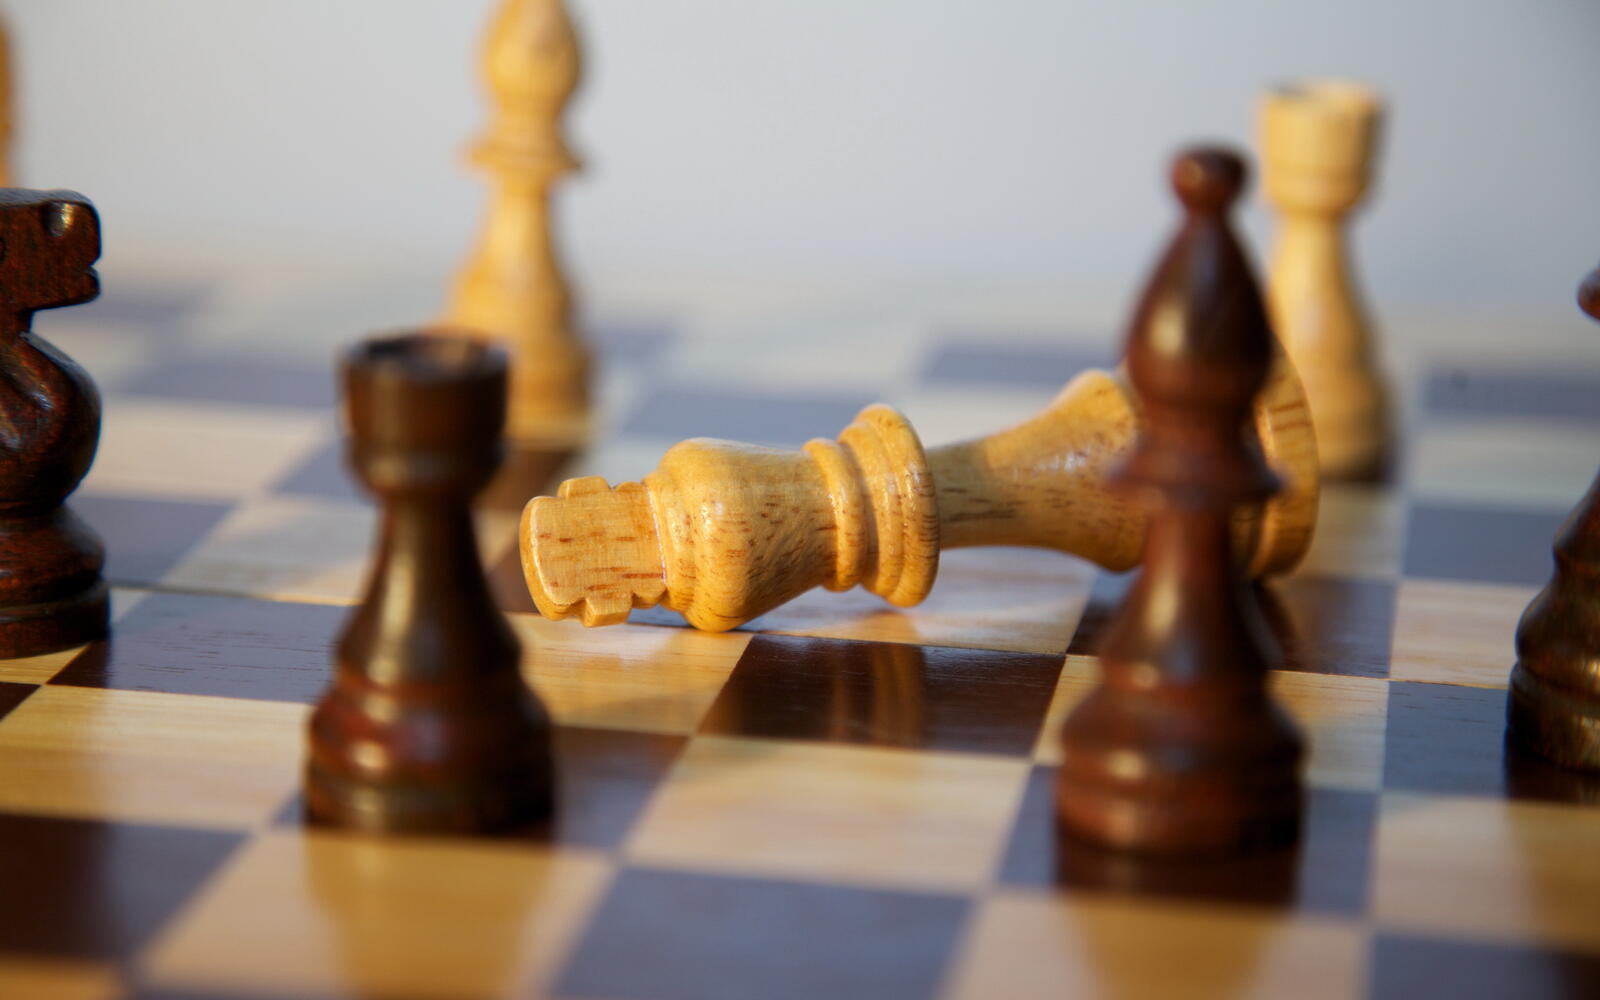 Бесплатное фото Фото доска, шахматы онлайн бесплатно